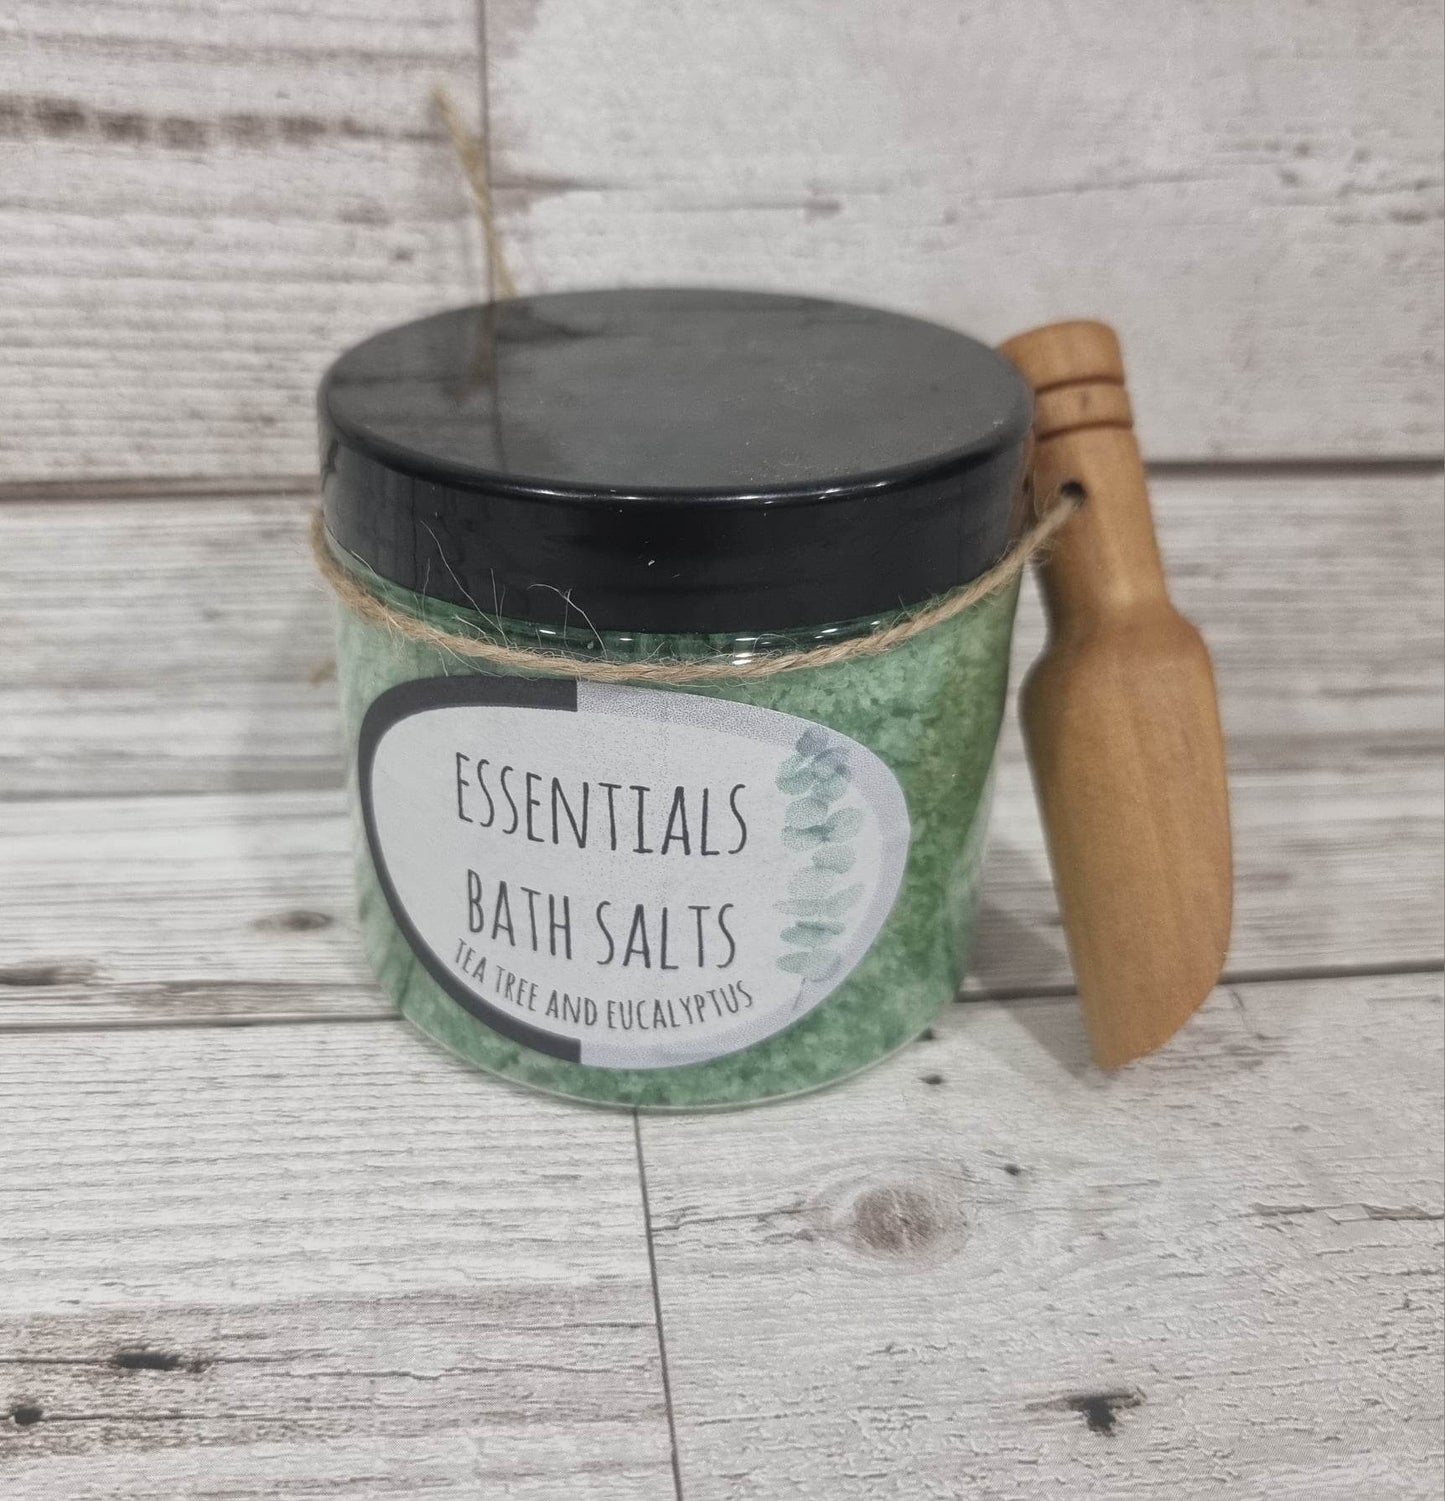 'Tea tree and Eucalyptus' Bath Salts